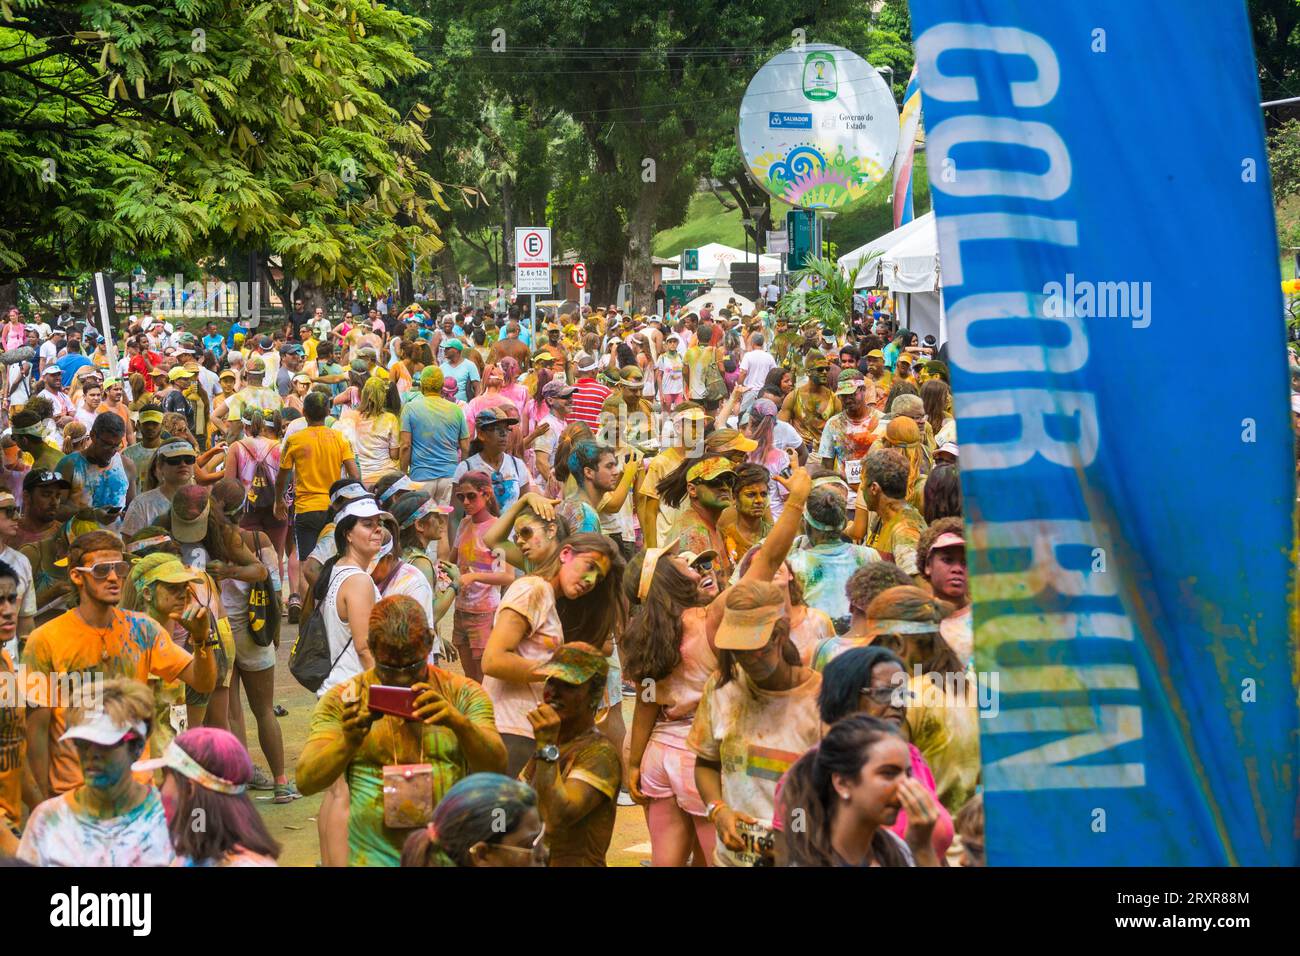 Salvador, Bahia, Brazil - March 22, 2015: Athletes have fun during the color run at Dique do Tororo in the city of Salvador, Bahia. Stock Photo